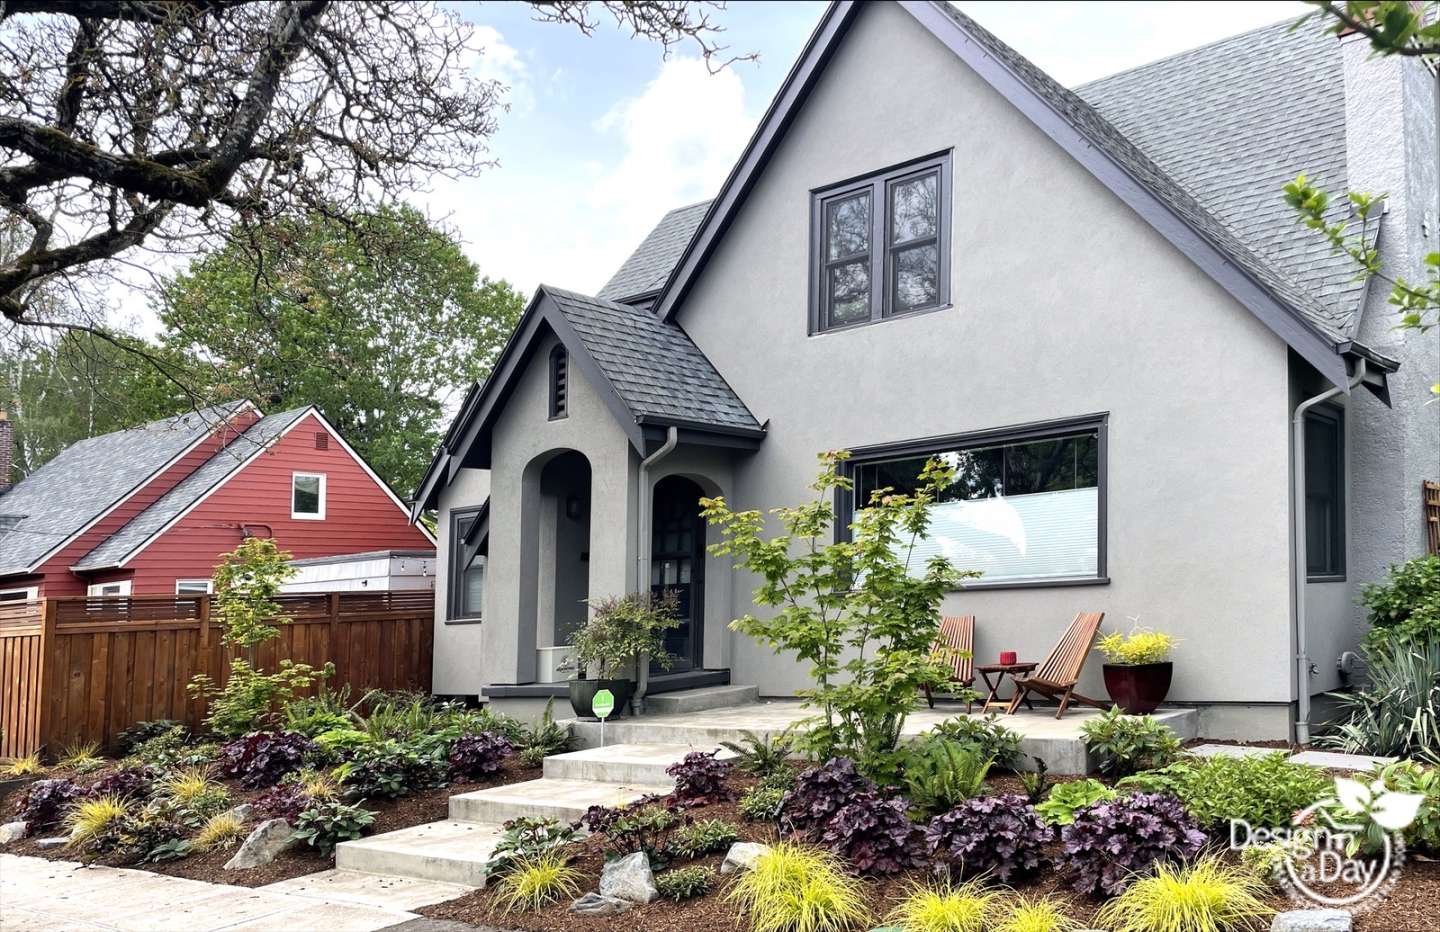 Tricky Residential Corner Landscape Overhaul in Northeast Portland